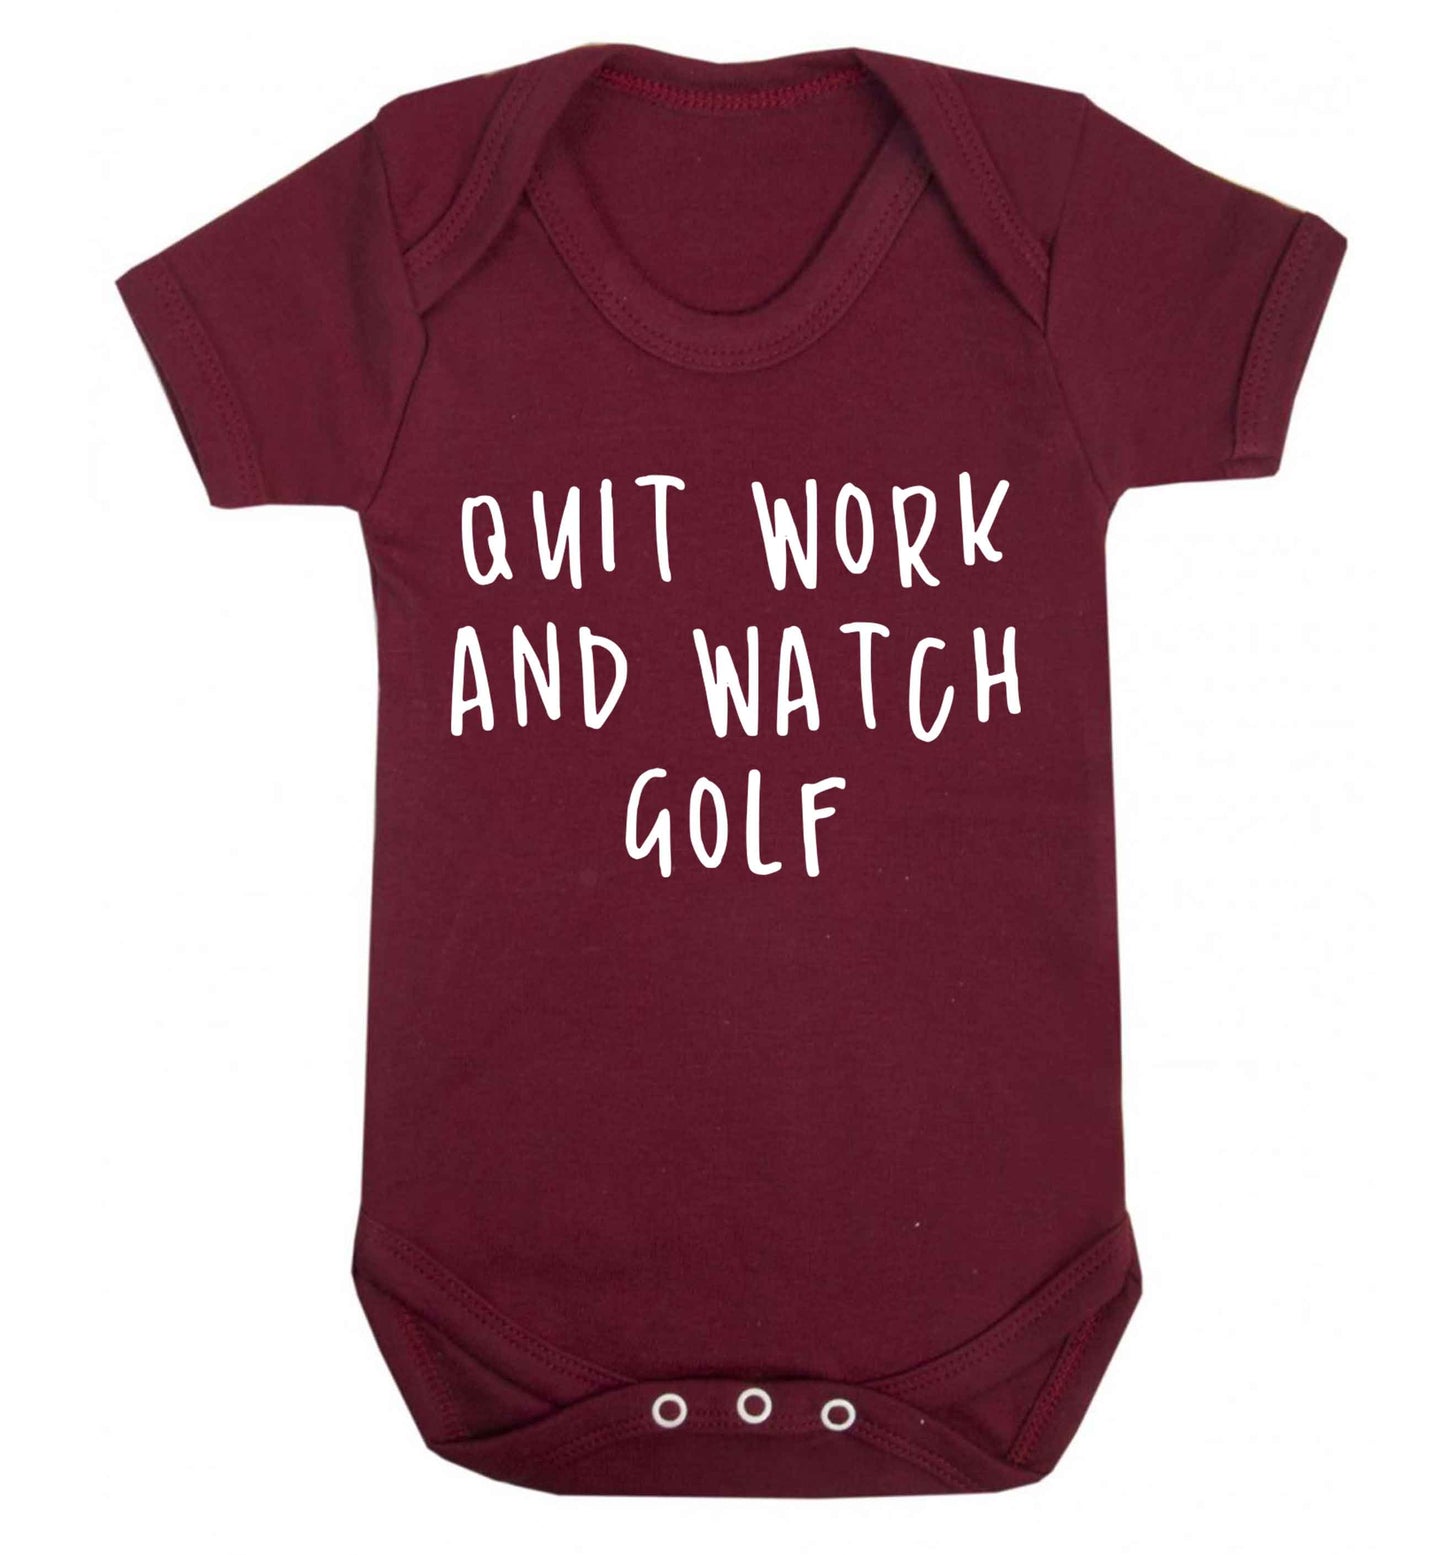 Quit work and watch golf Baby Vest maroon 18-24 months